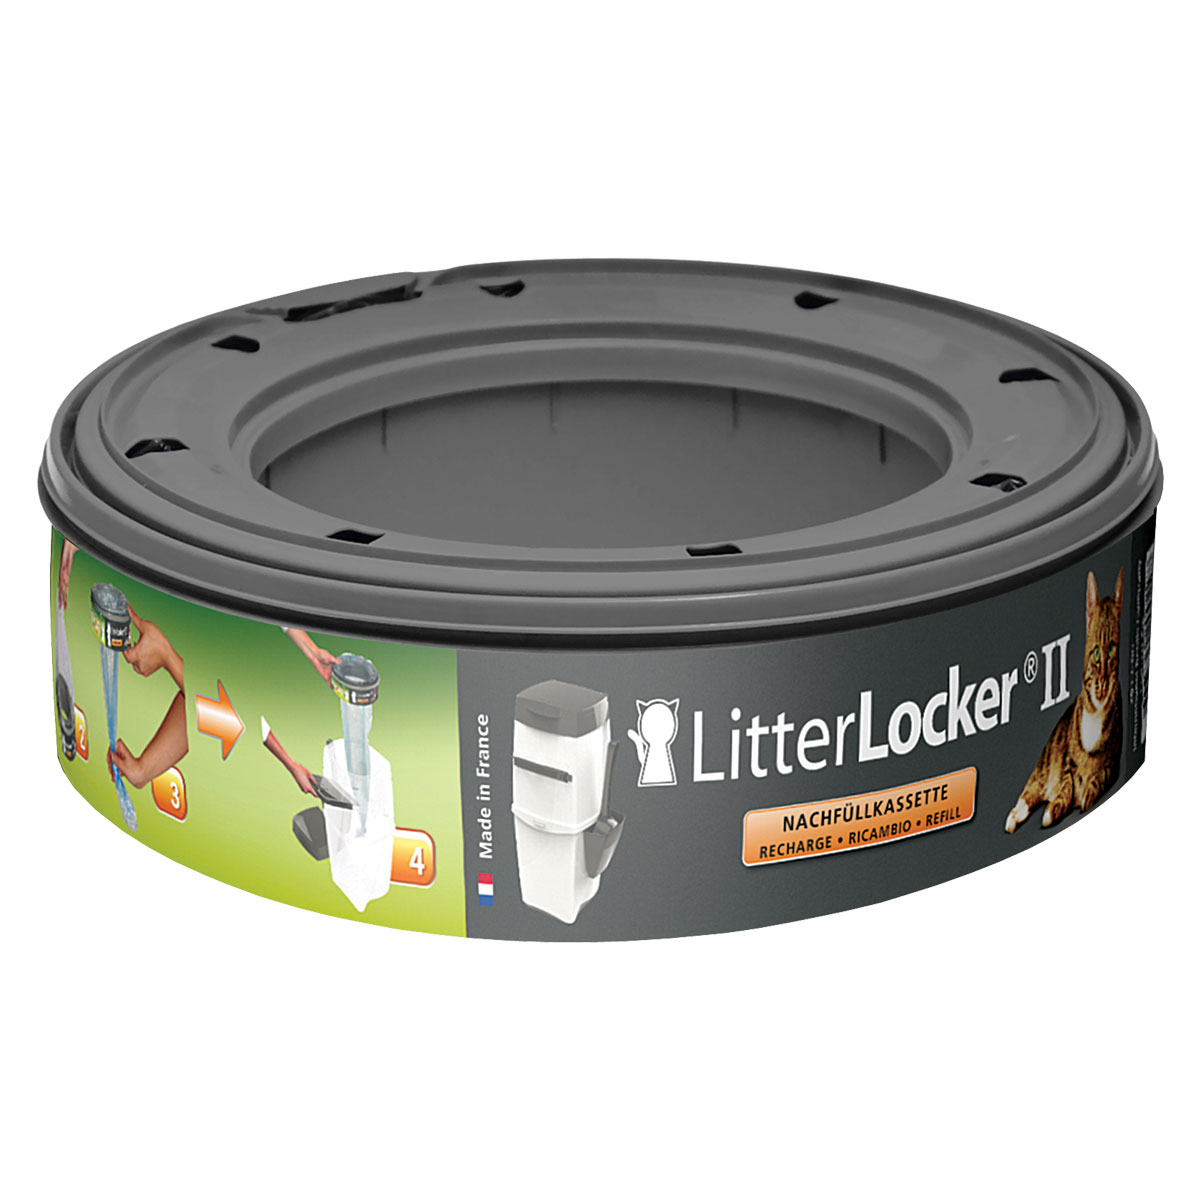 LitterLocker II – Nachfüllkassette 3 Stück